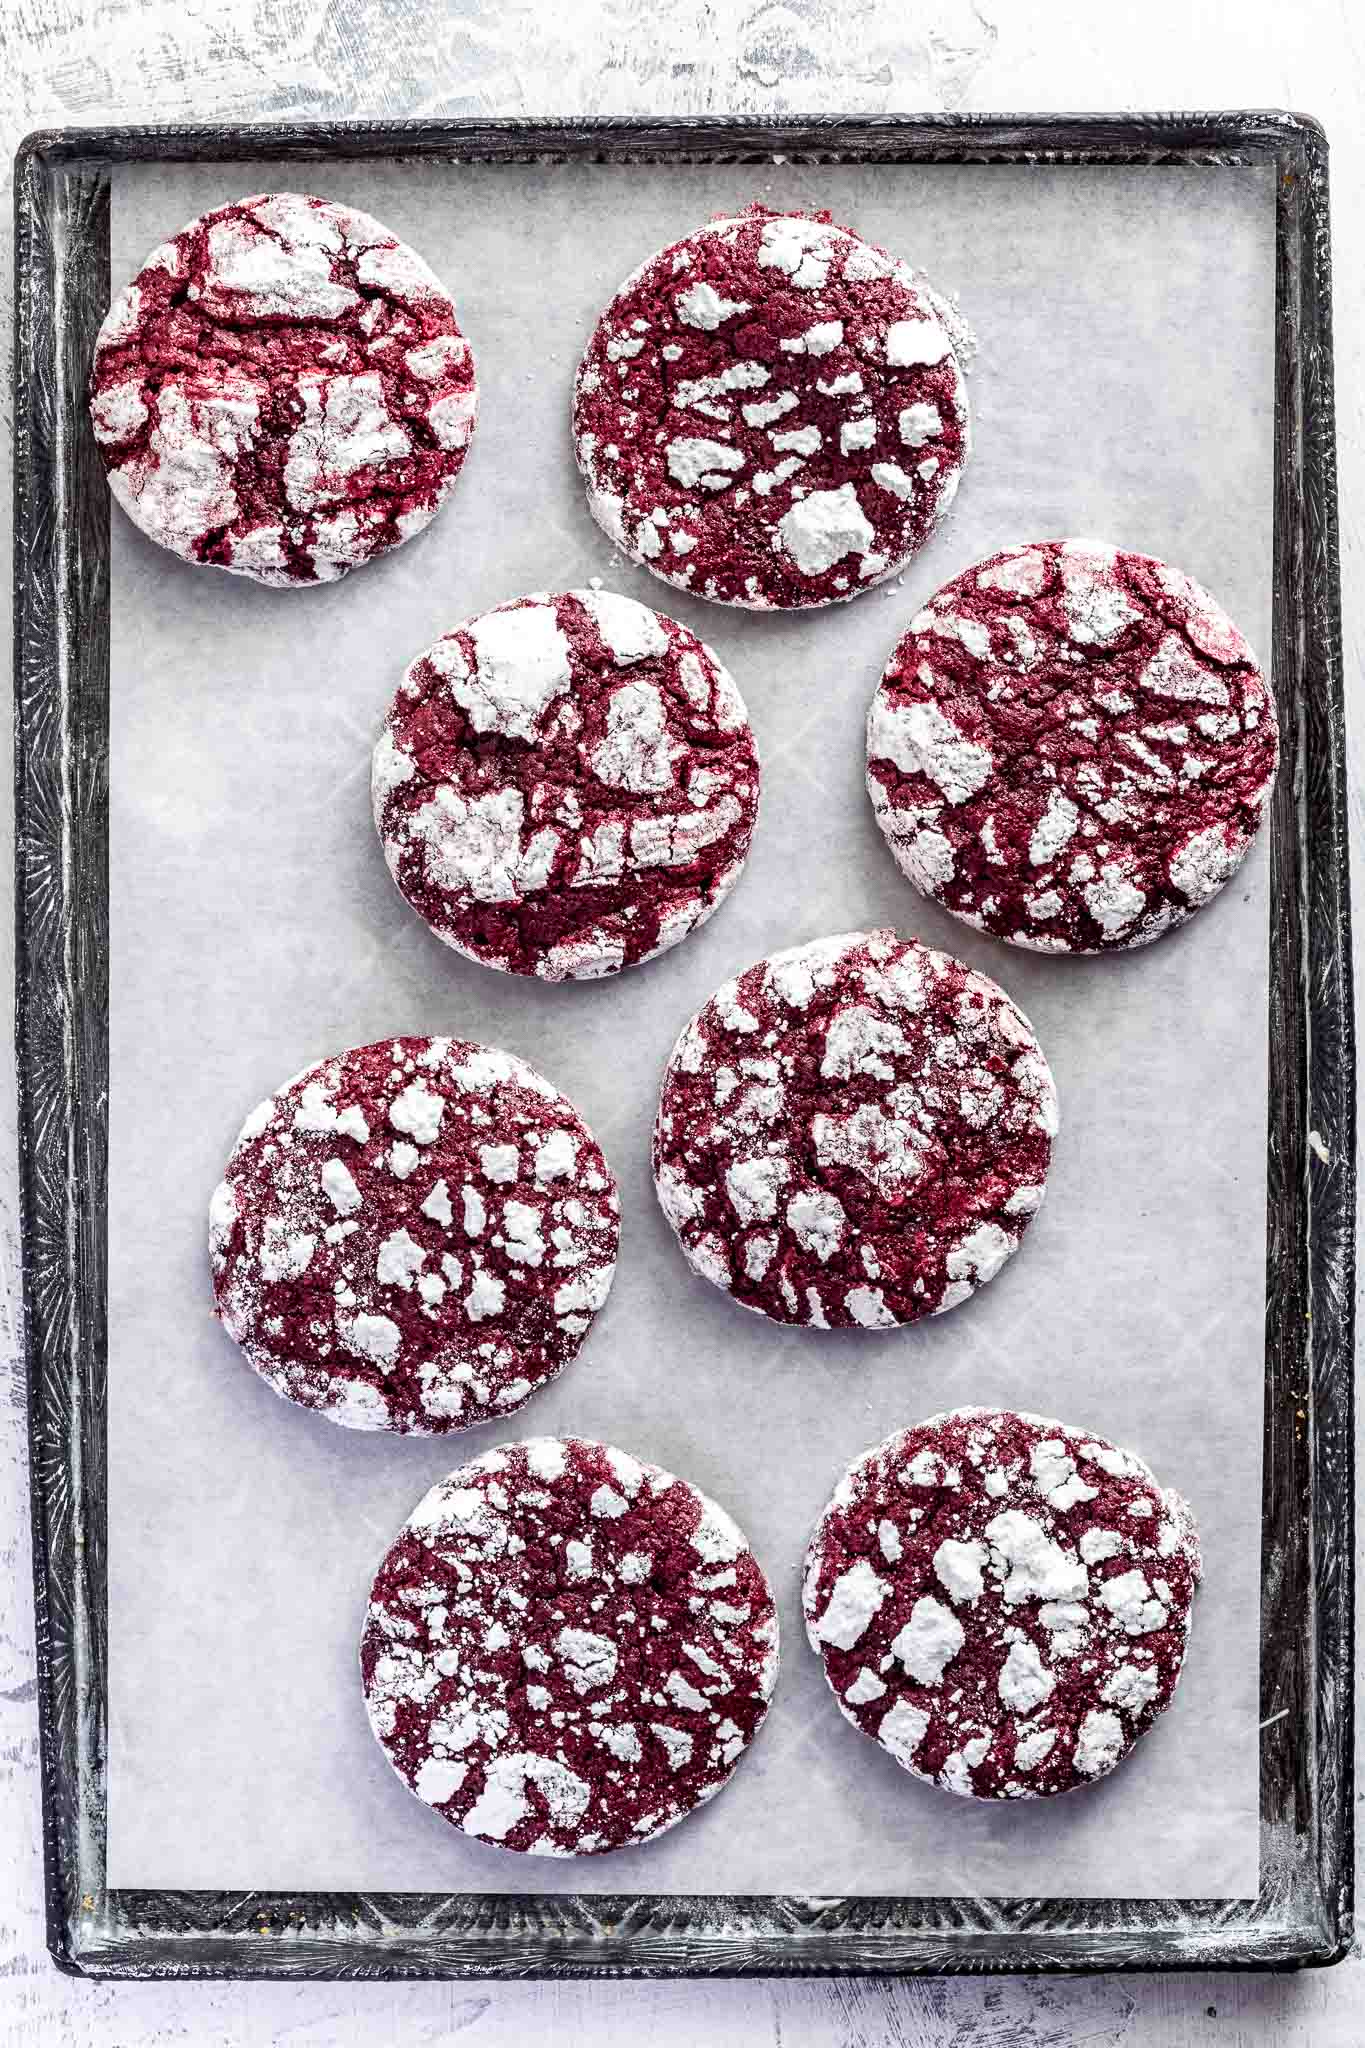 8 red velvet crinkle cookies on a vintage tray